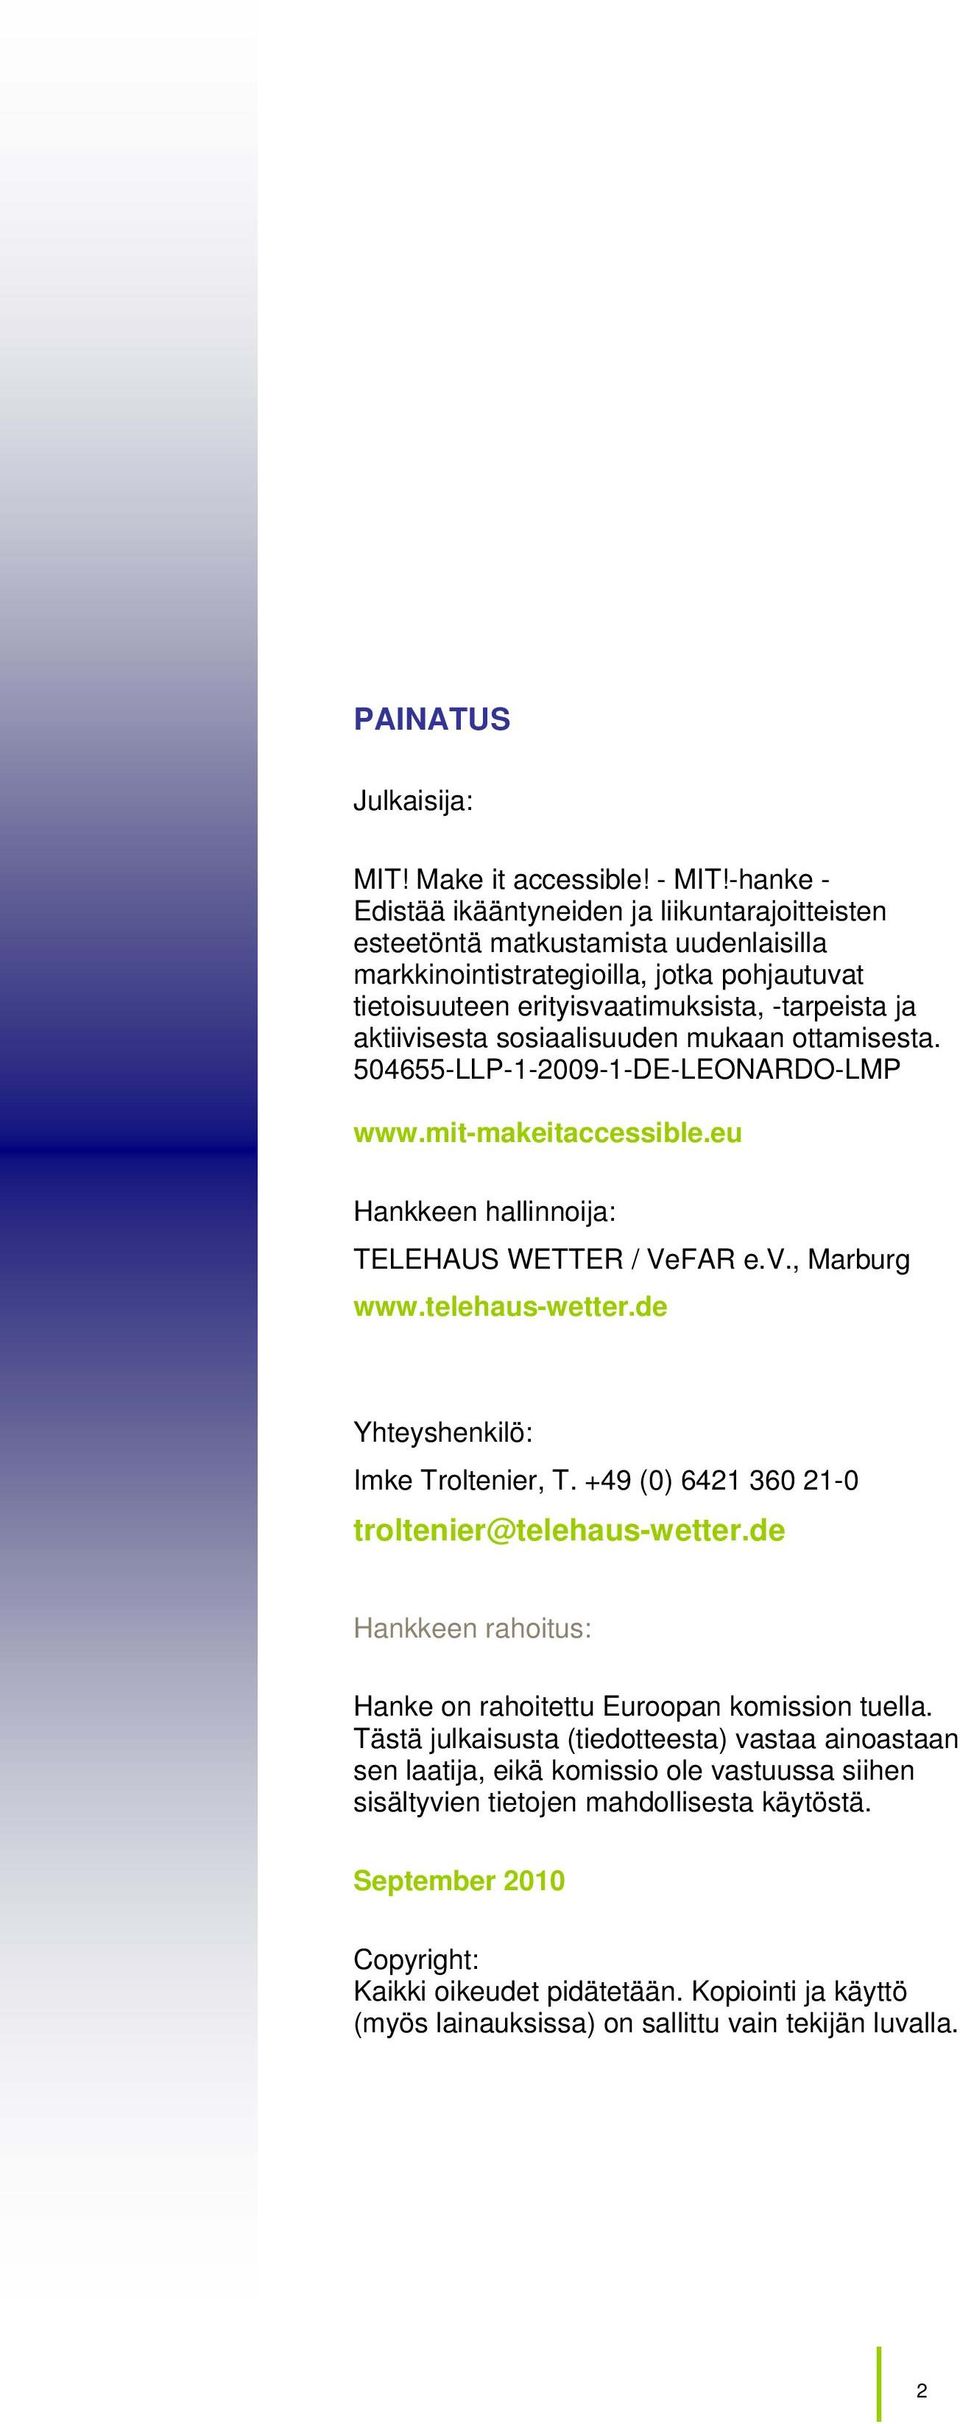 aktiivisesta sosiaalisuuden mukaan ottamisesta. 504655-LLP-1-2009-1-DE-LEONARDO-LMP www.mit-makeitaccessible.eu Hankkeen hallinnoija: TELEHAUS WETTER / VeFAR e.v., Marburg www.telehaus-wetter.